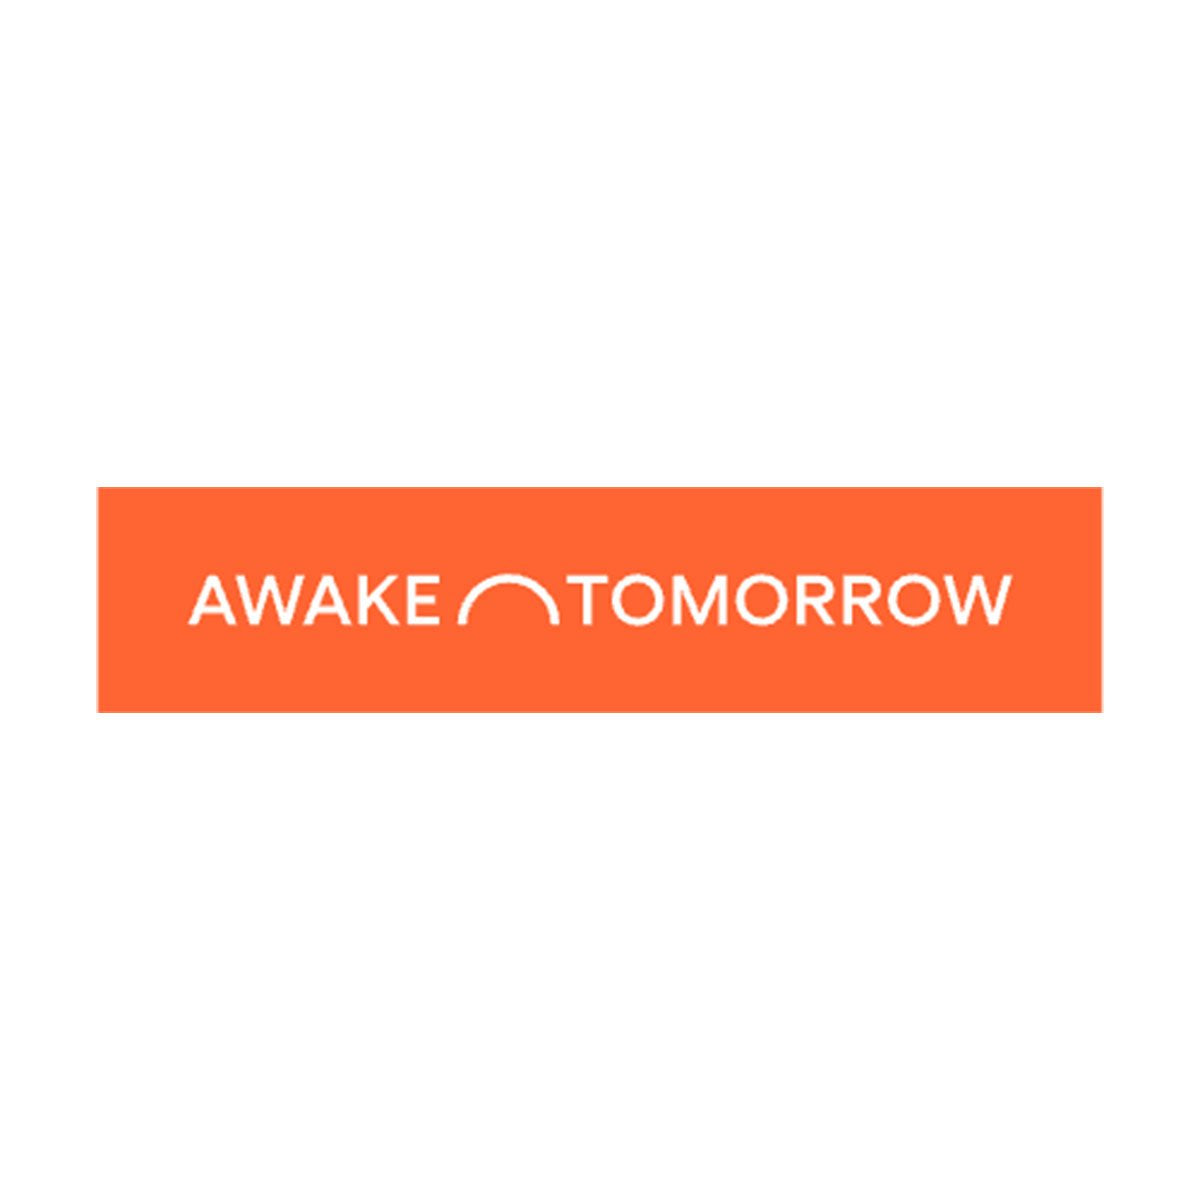 Awake Tomorrow Sticker, Single